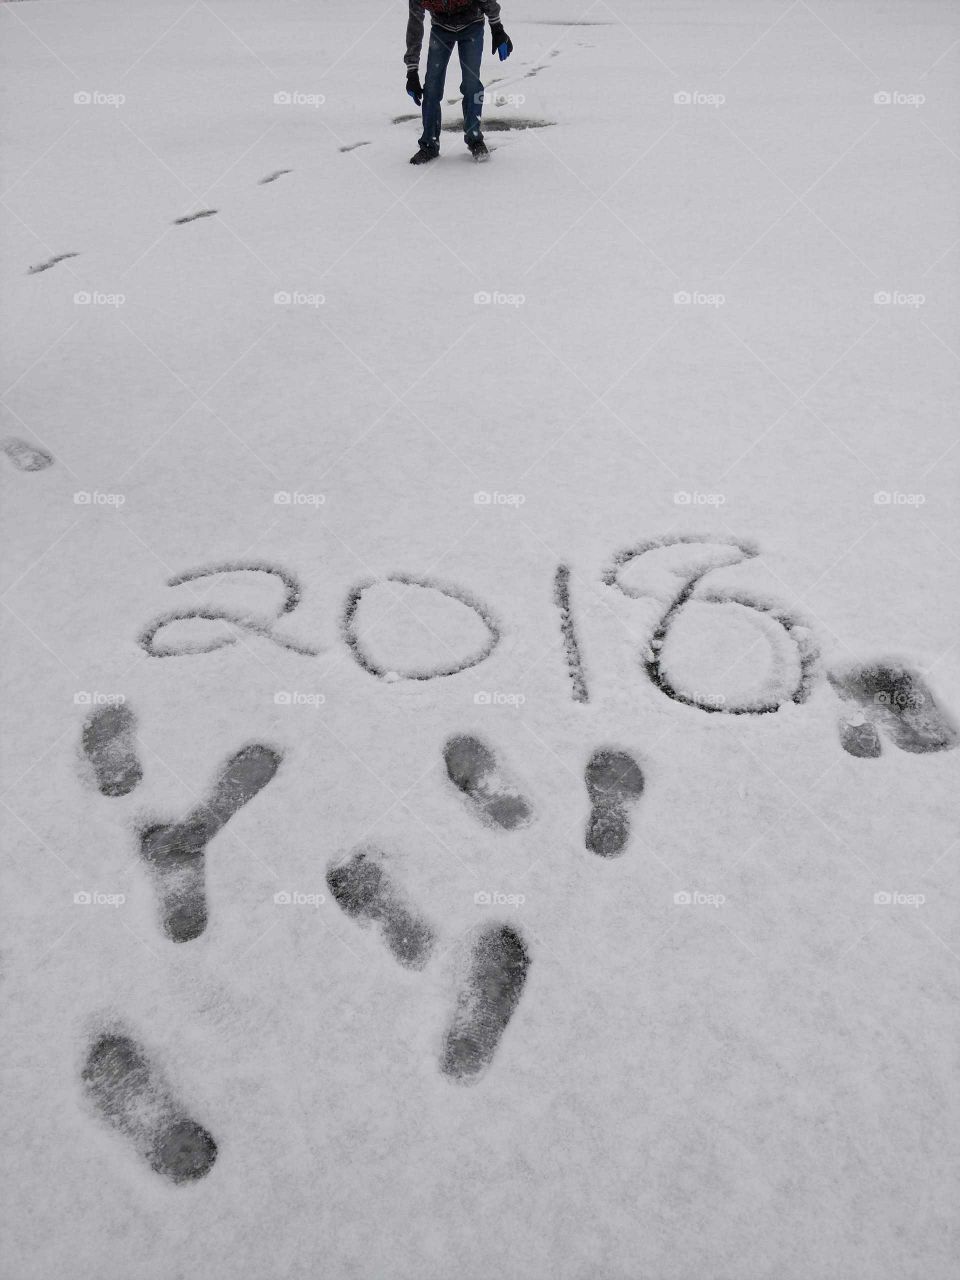 Footprints in the rare heavy snowfall in southeast Georgia.